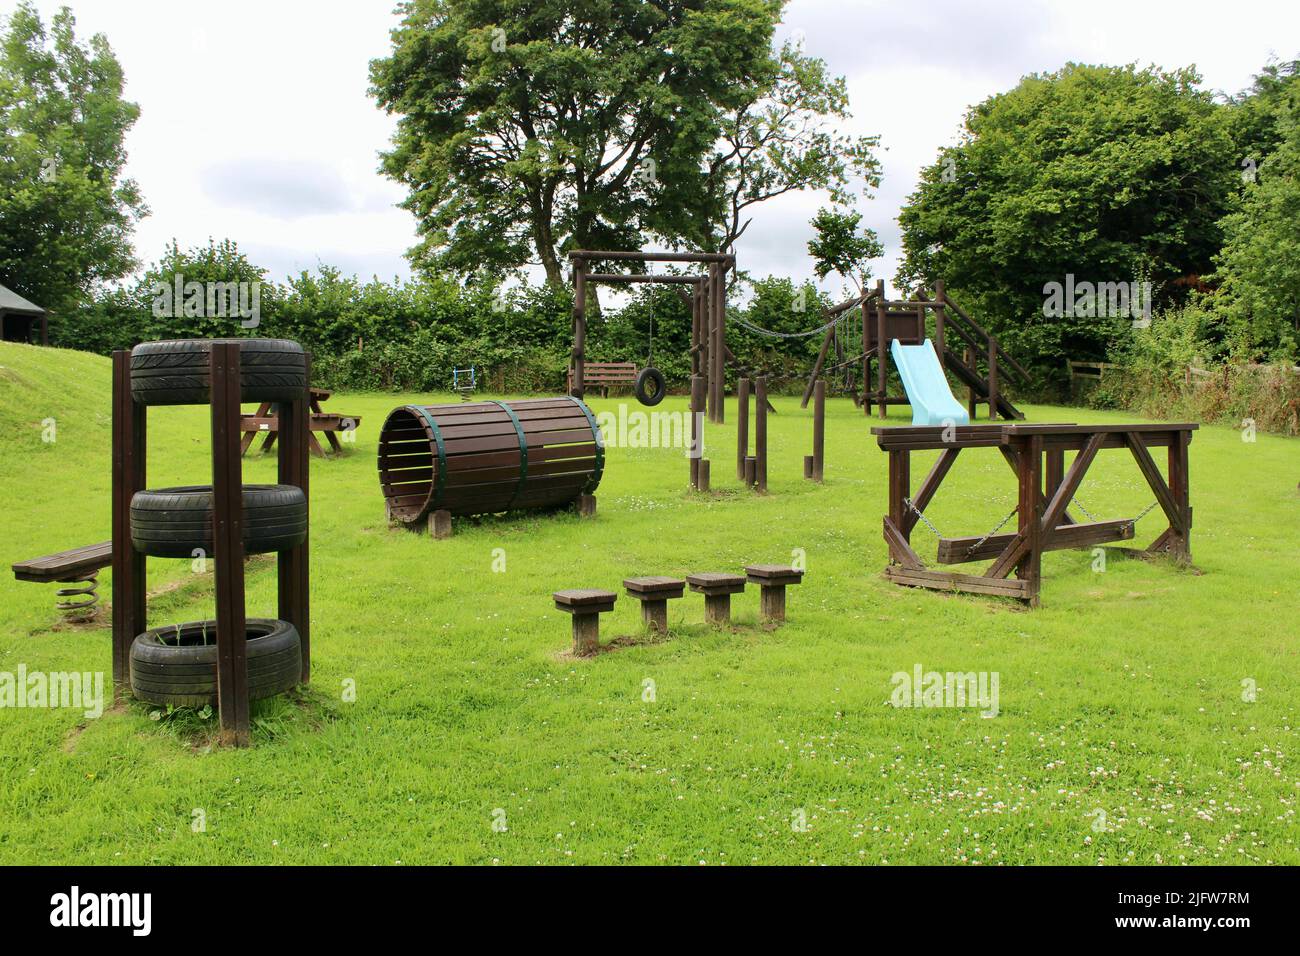 Corscombe, Dorset, Enland, Reino Unido - Zona de juegos al aire libre Foto de stock